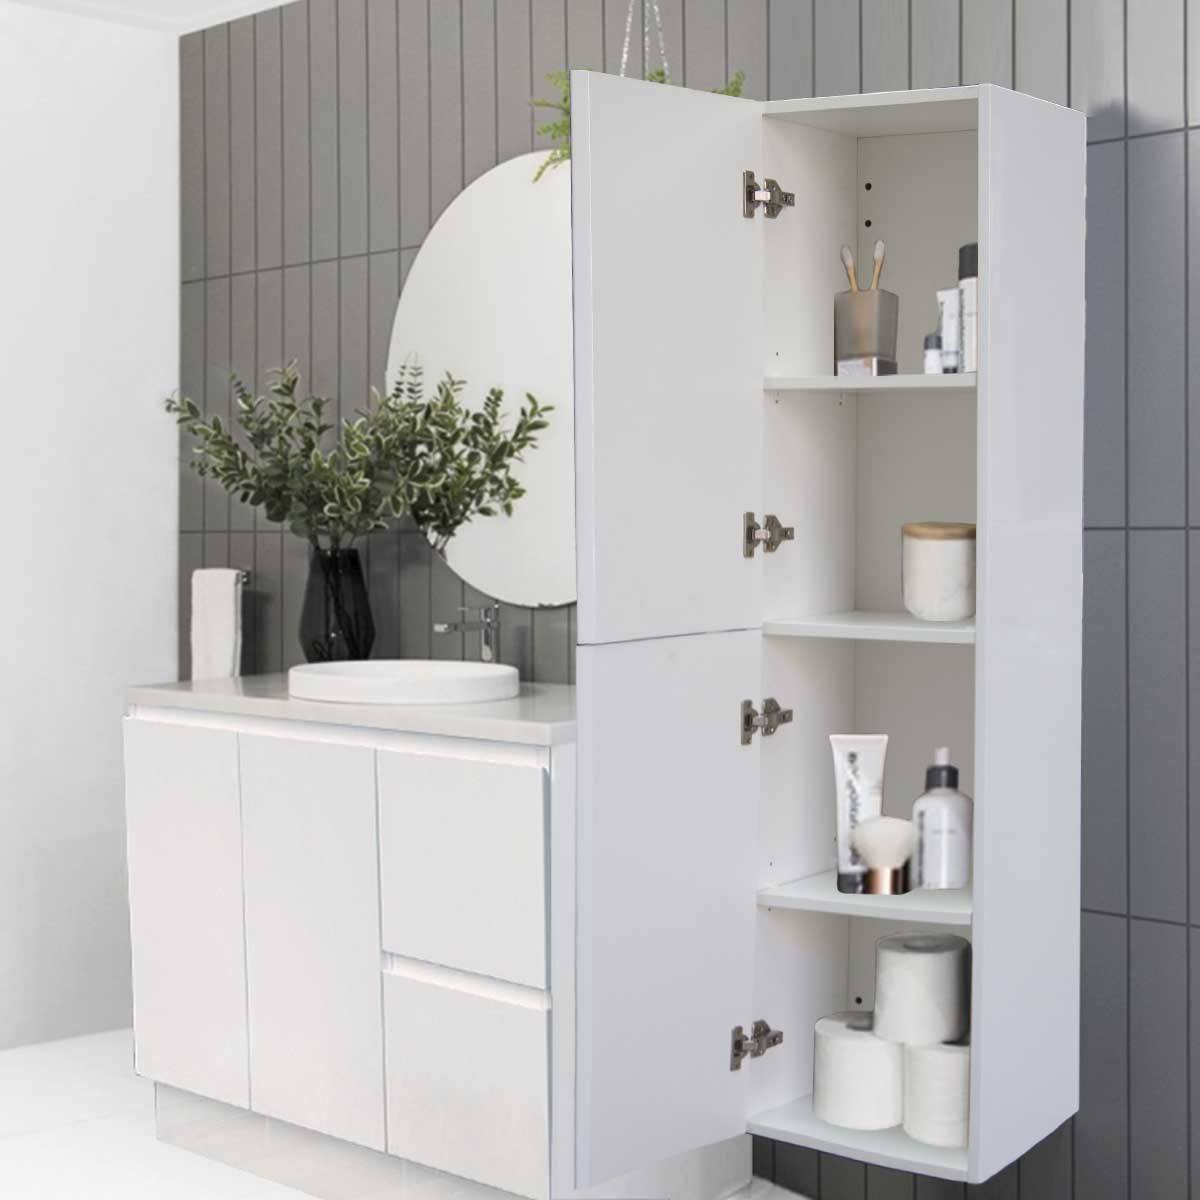 Glossy Bathroom Tallboy Storage Cabinet with Mirror in White